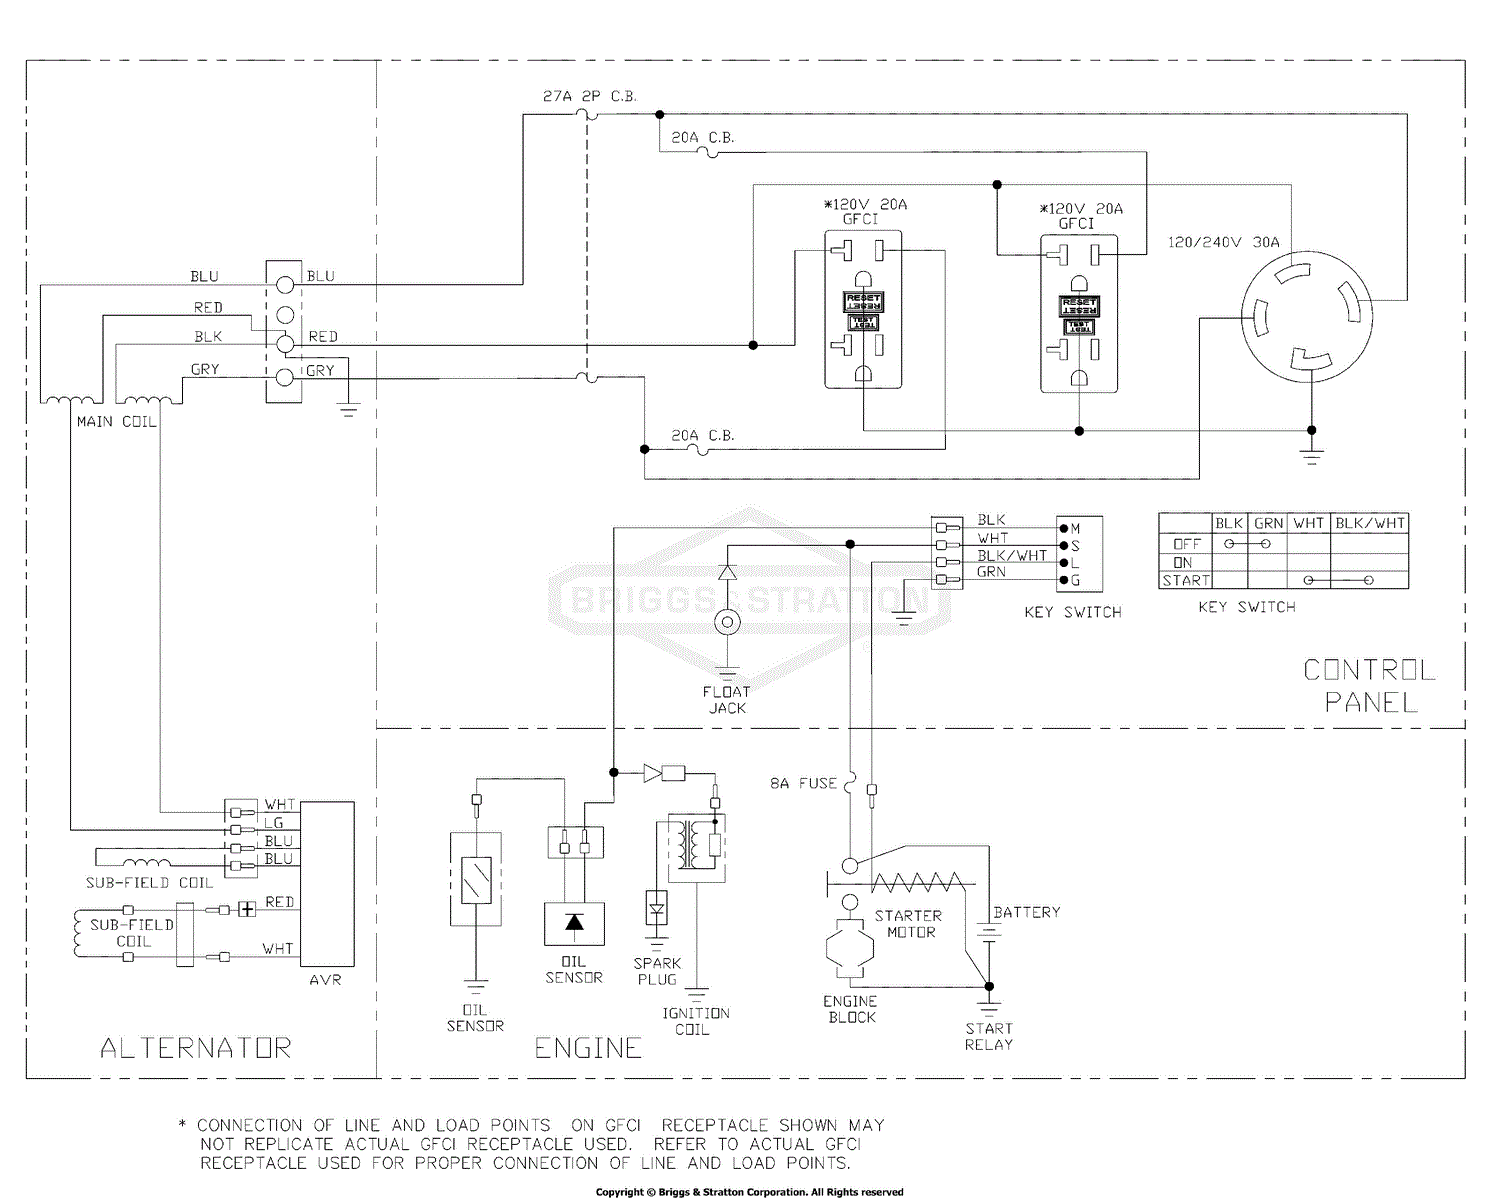 Diagram Briggs And Stratton Power Products 030651 00 Wiring Diagram Full Version Hd Quality Wiring Diagram Wiringdiagramport Rougemandarine Fr